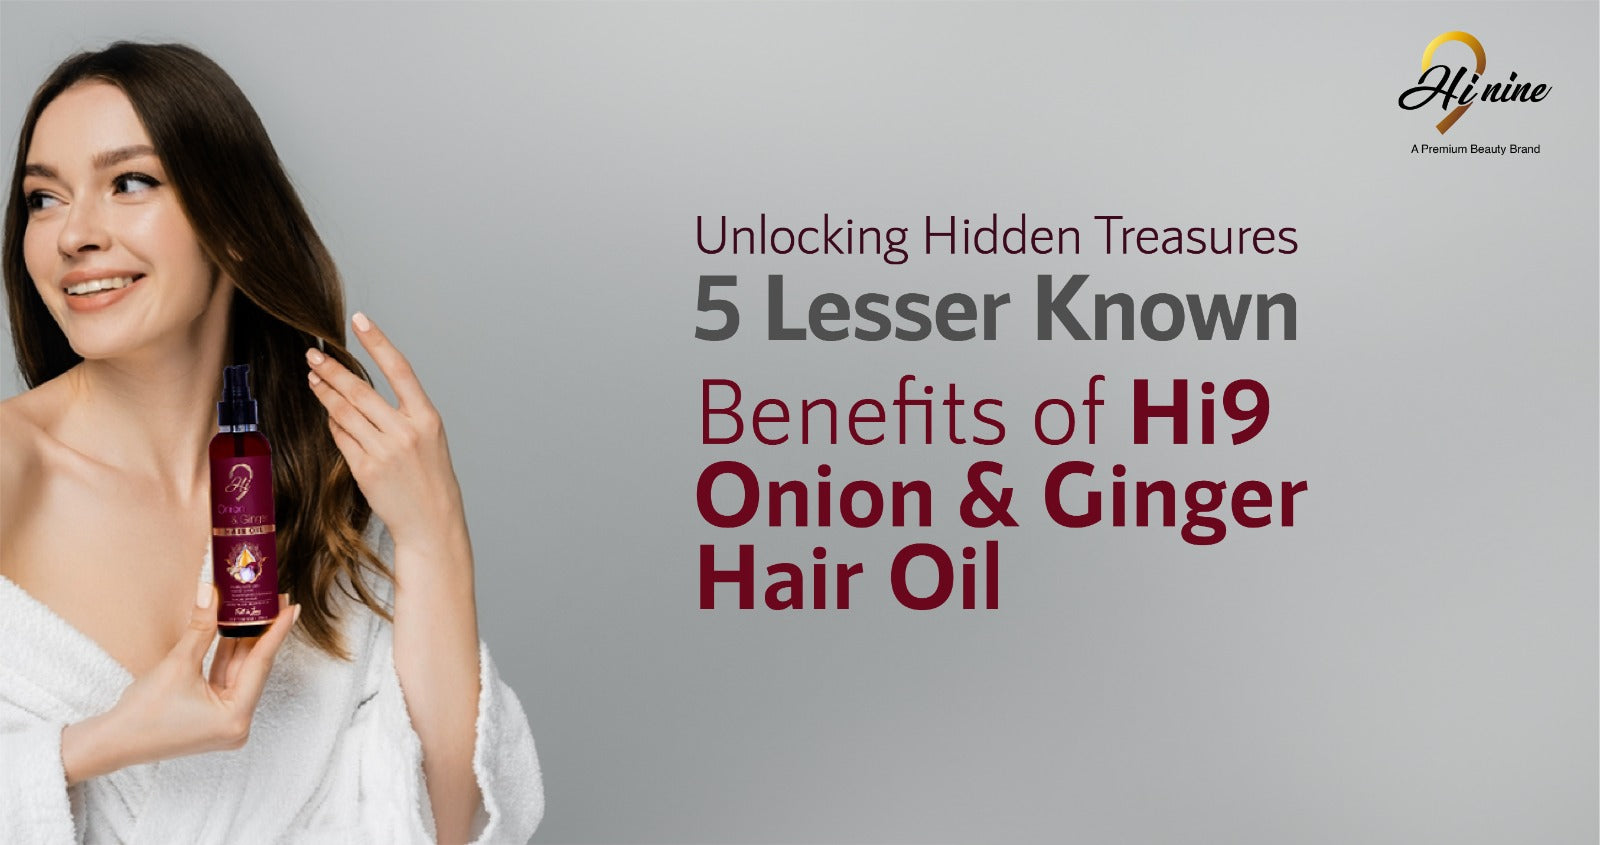 Unlocking Hidden Treasures 5 Lesser : Known Benefits of Hi9 Onion & Ginger Hair Oil